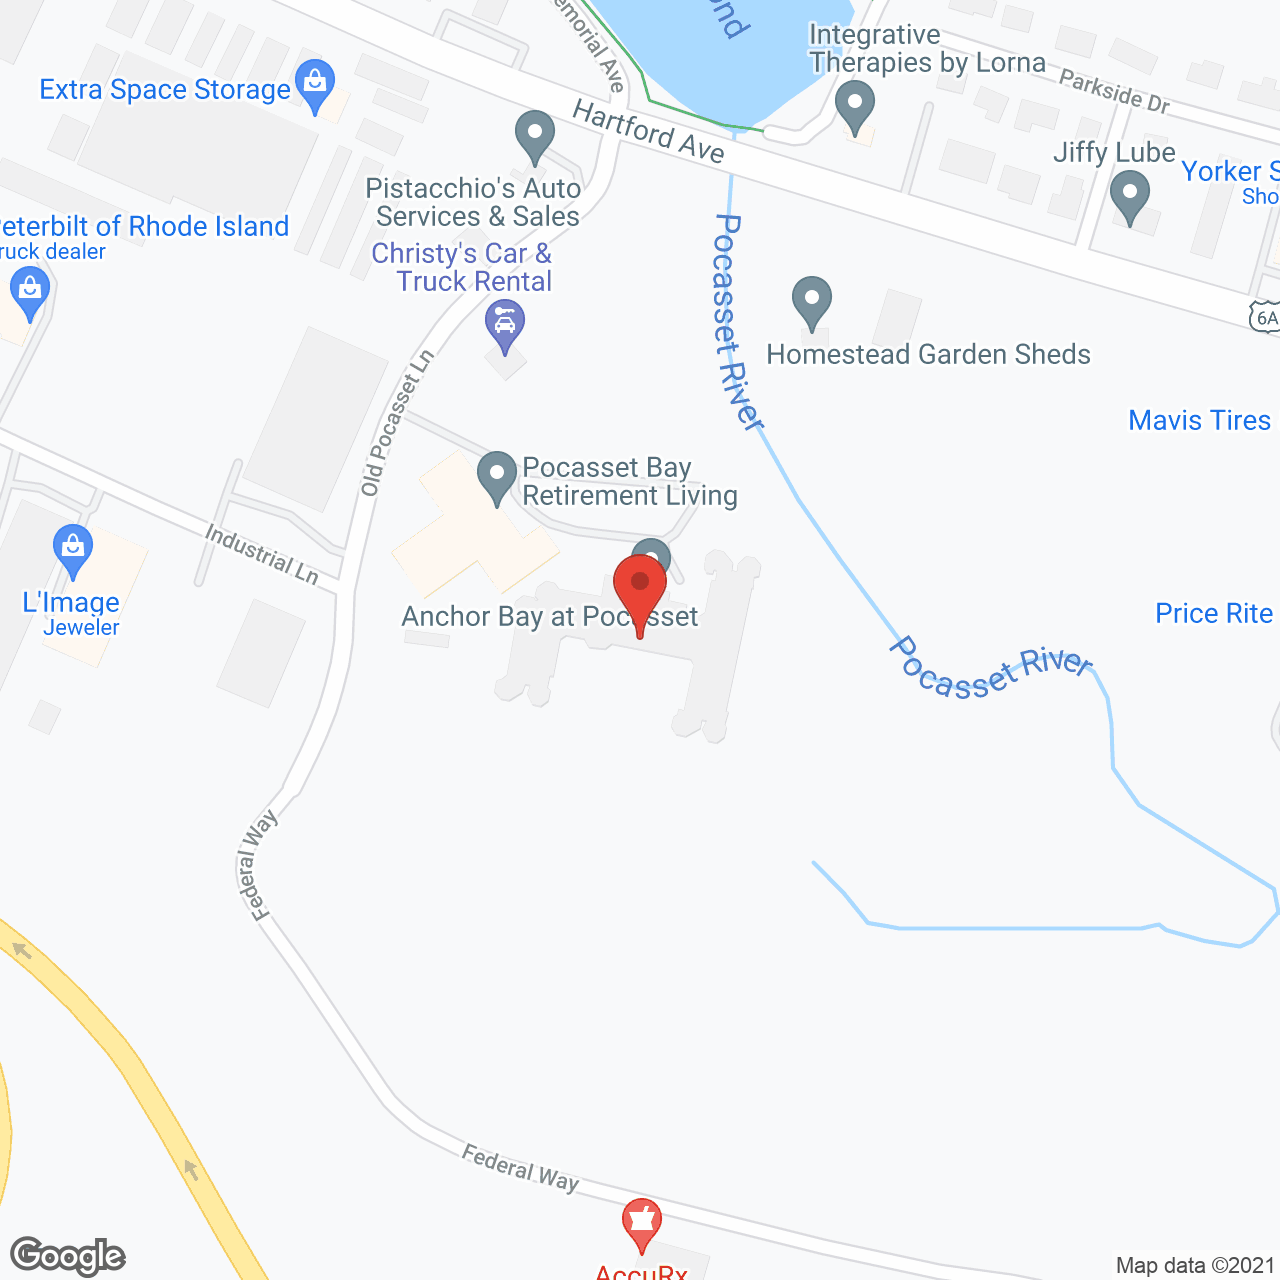 Anchor Bay at Pocasset in google map